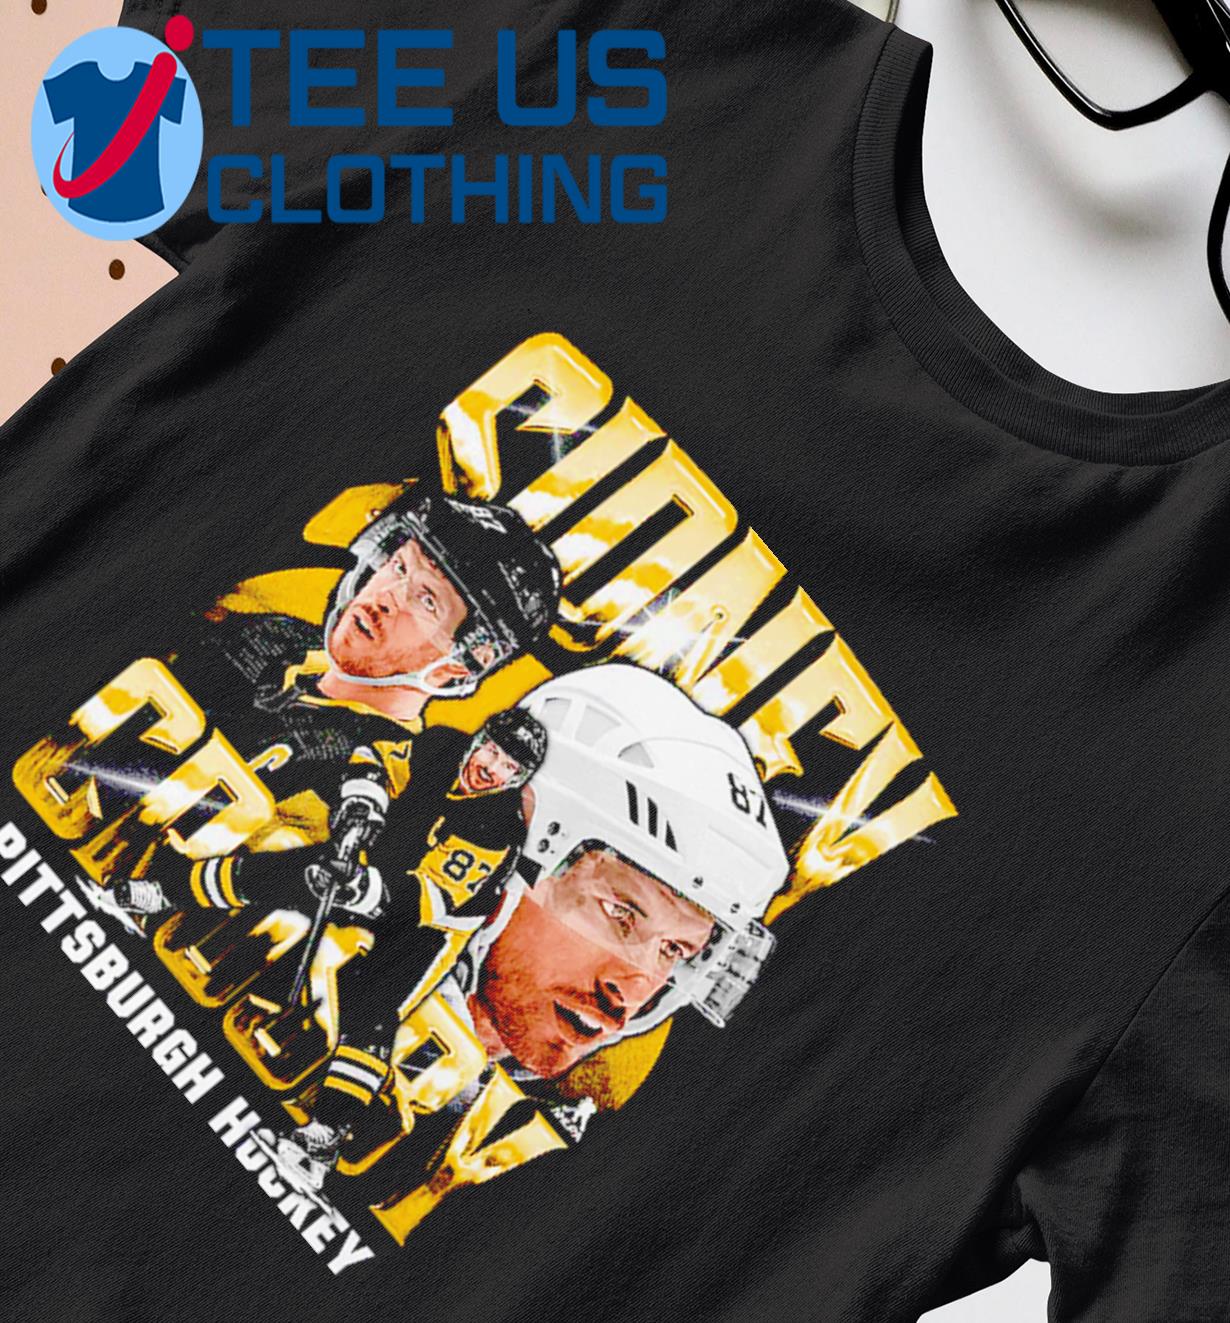 Sidney Crosby Vintage Unisex Shirt Vintage Sidney Crosby 